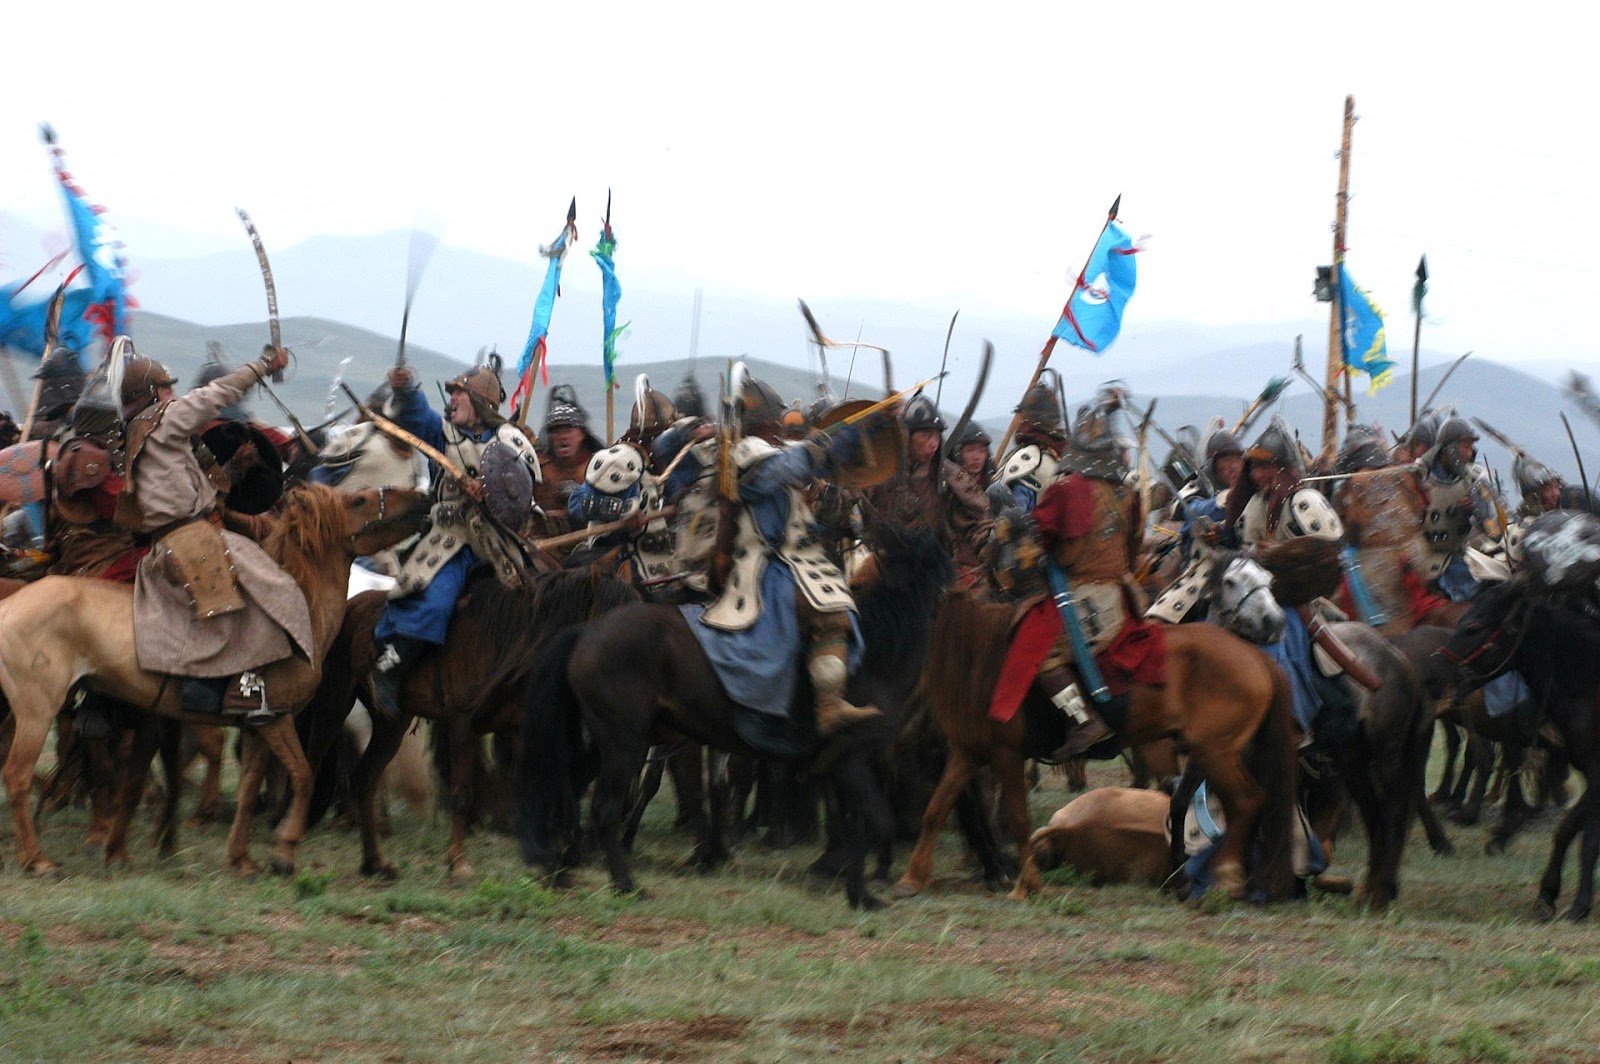 A reenactment of a Mongol battle. Image via Wikimedia Commons.